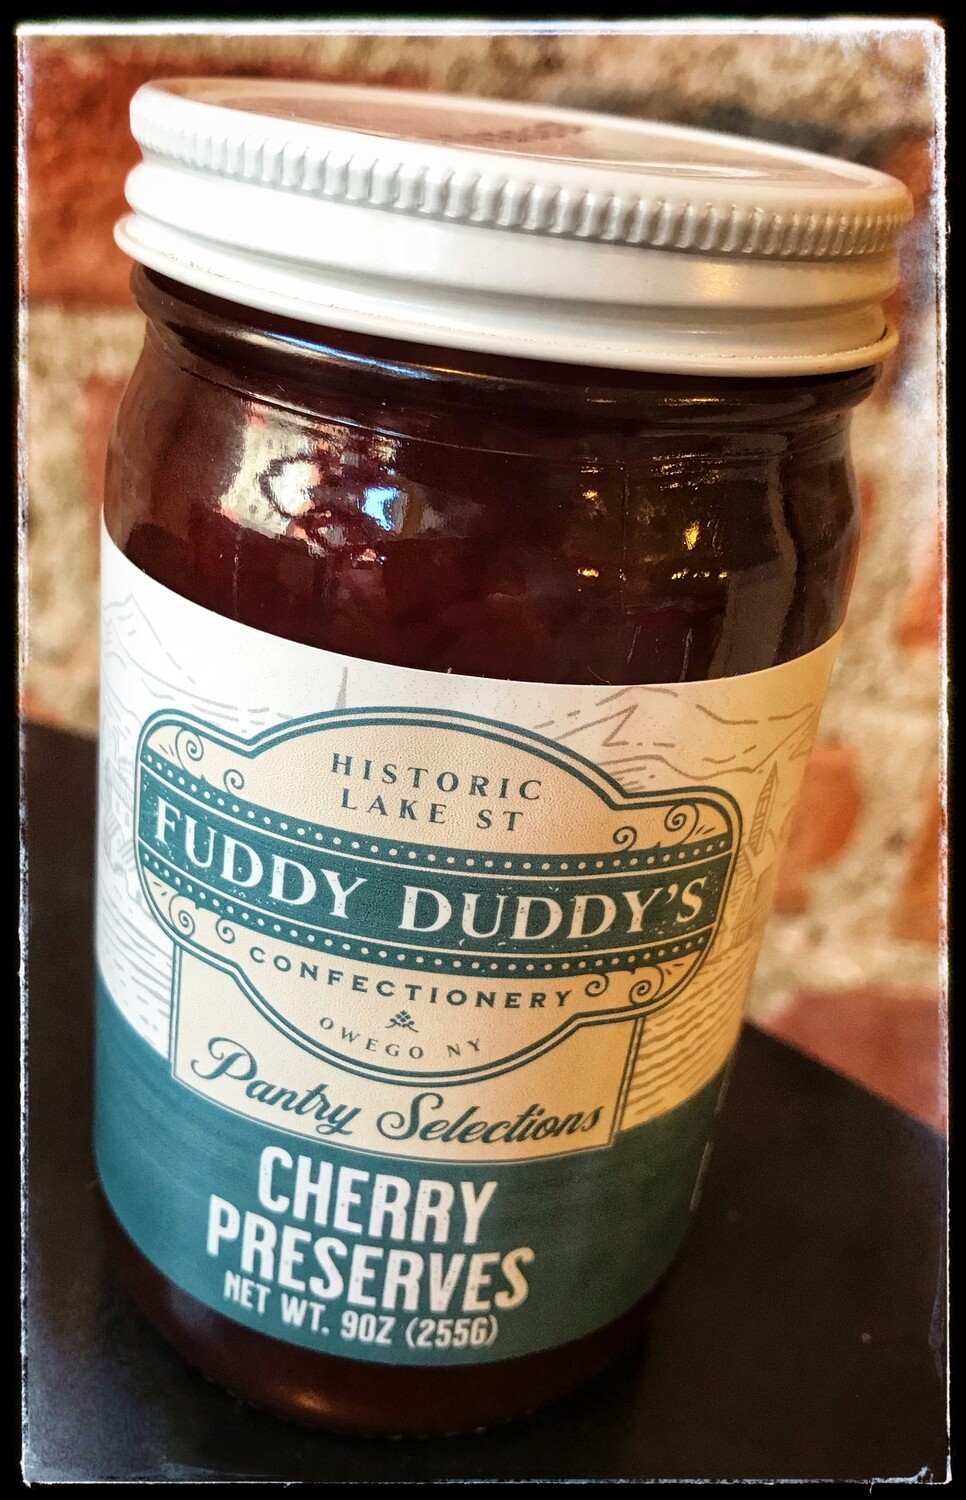 Fuddy Duddy's Cherry Preserves